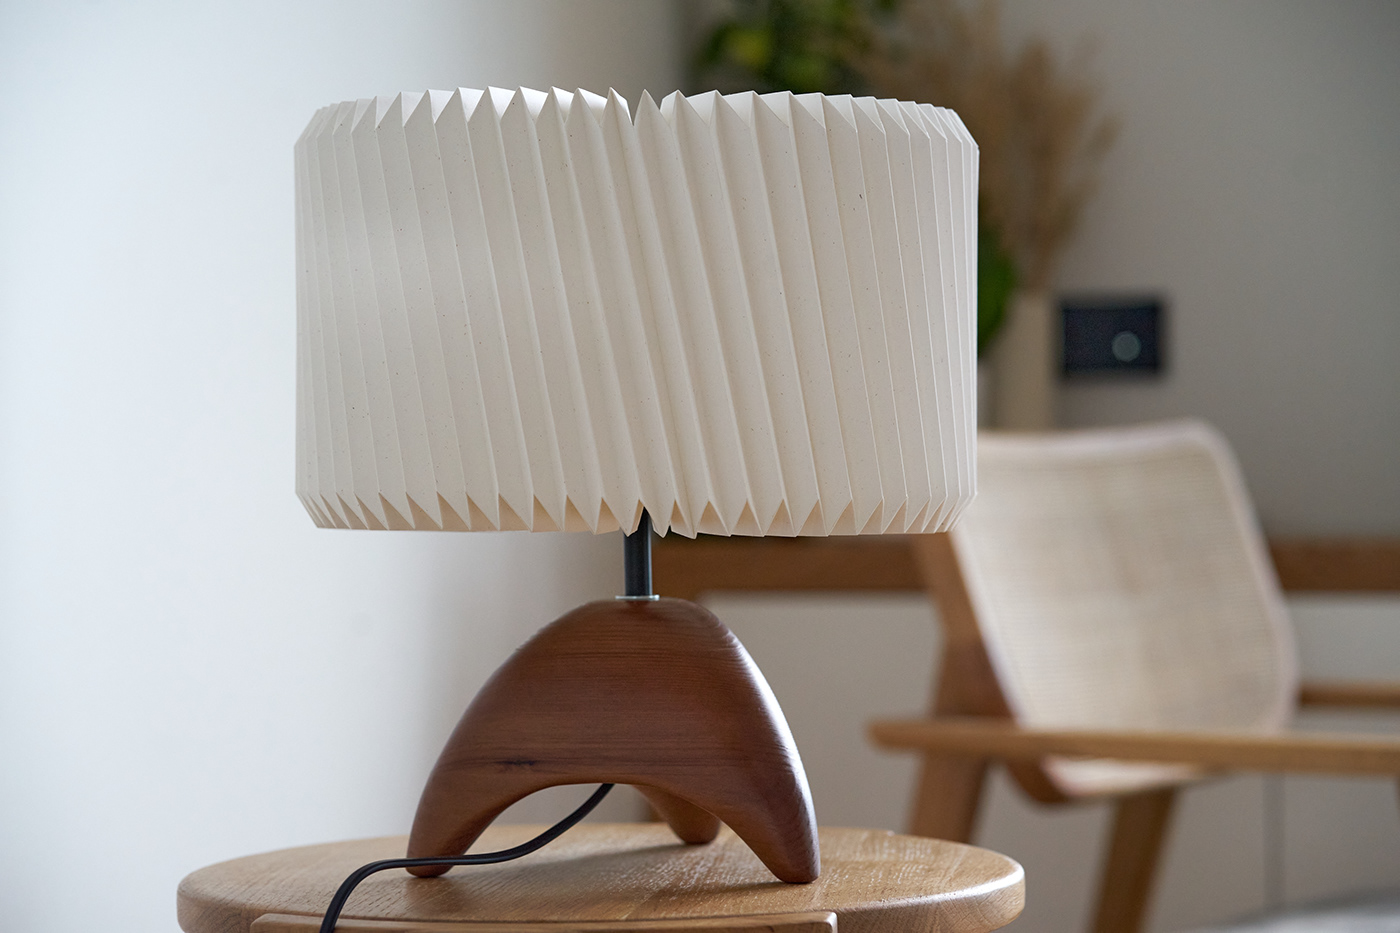 furniture handmade industrial design  Interior paper art papercraft product design  table lamp woodworking